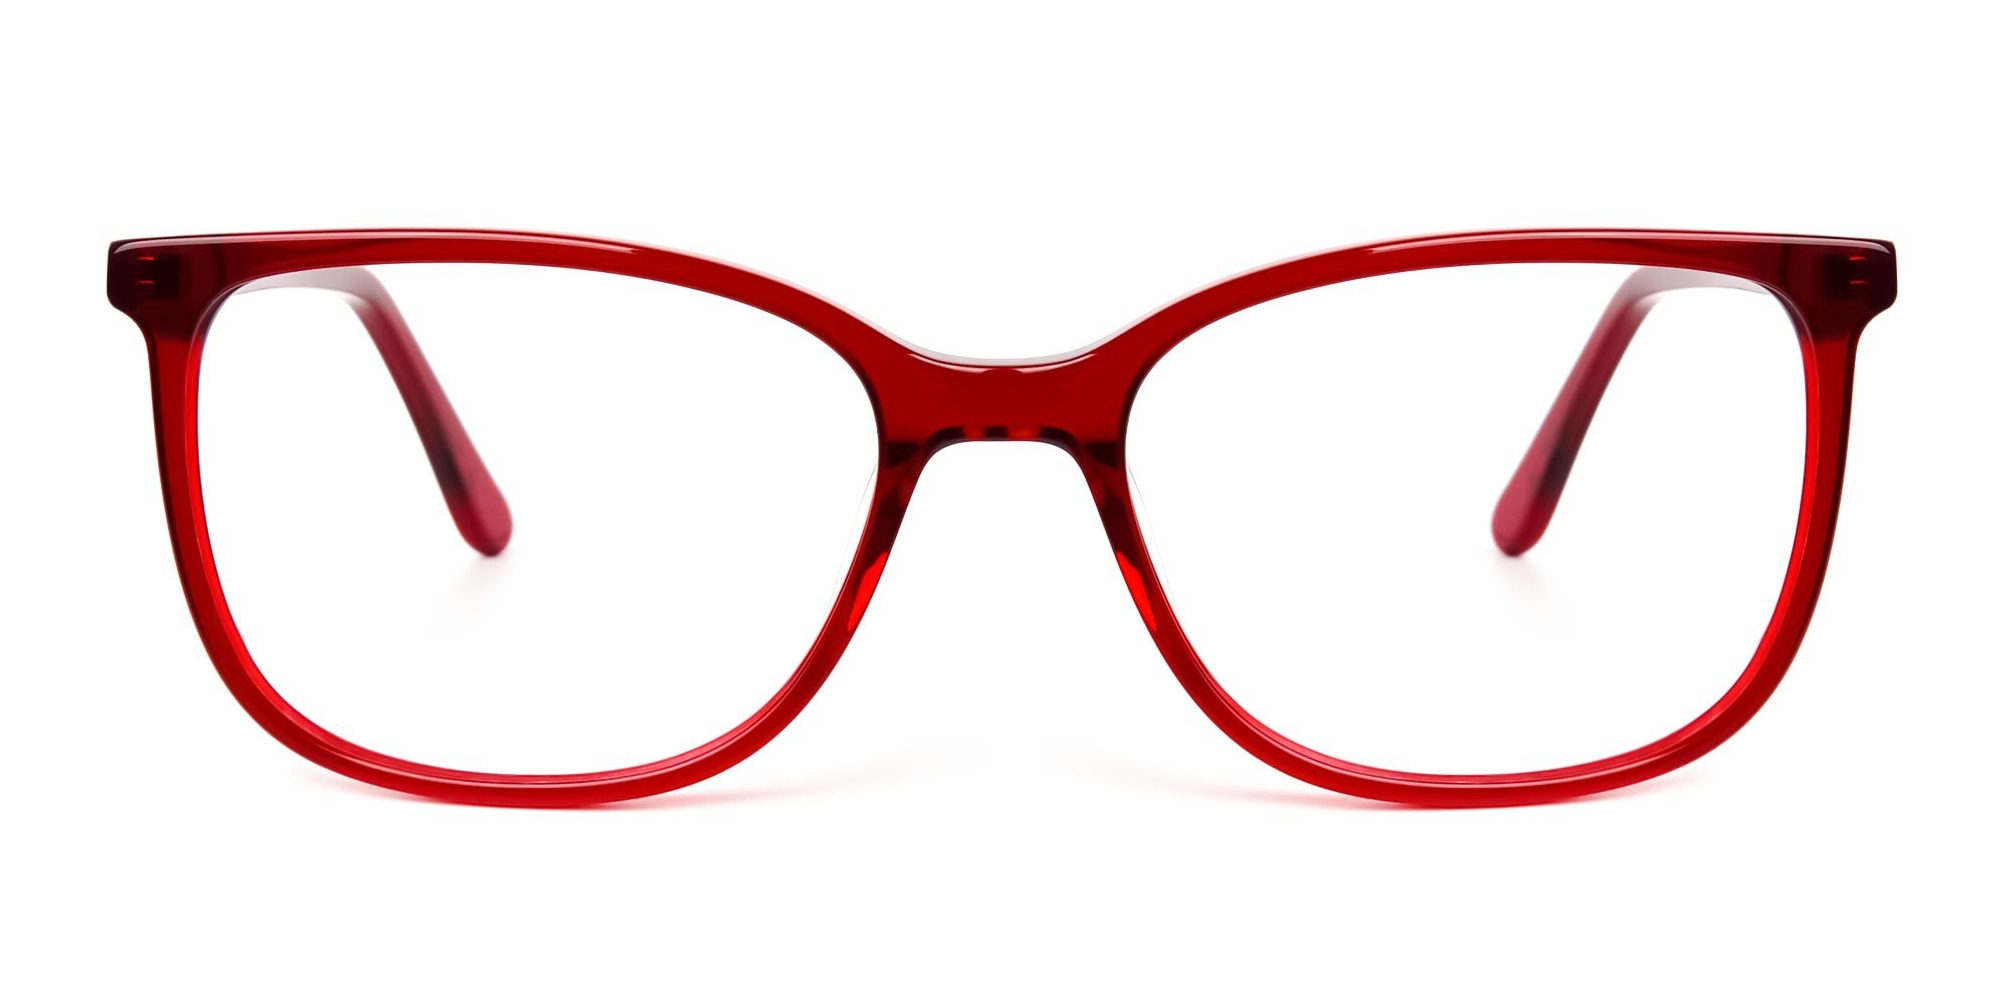 dark-and-red-square-cateye-glasses-glasses-frames-1